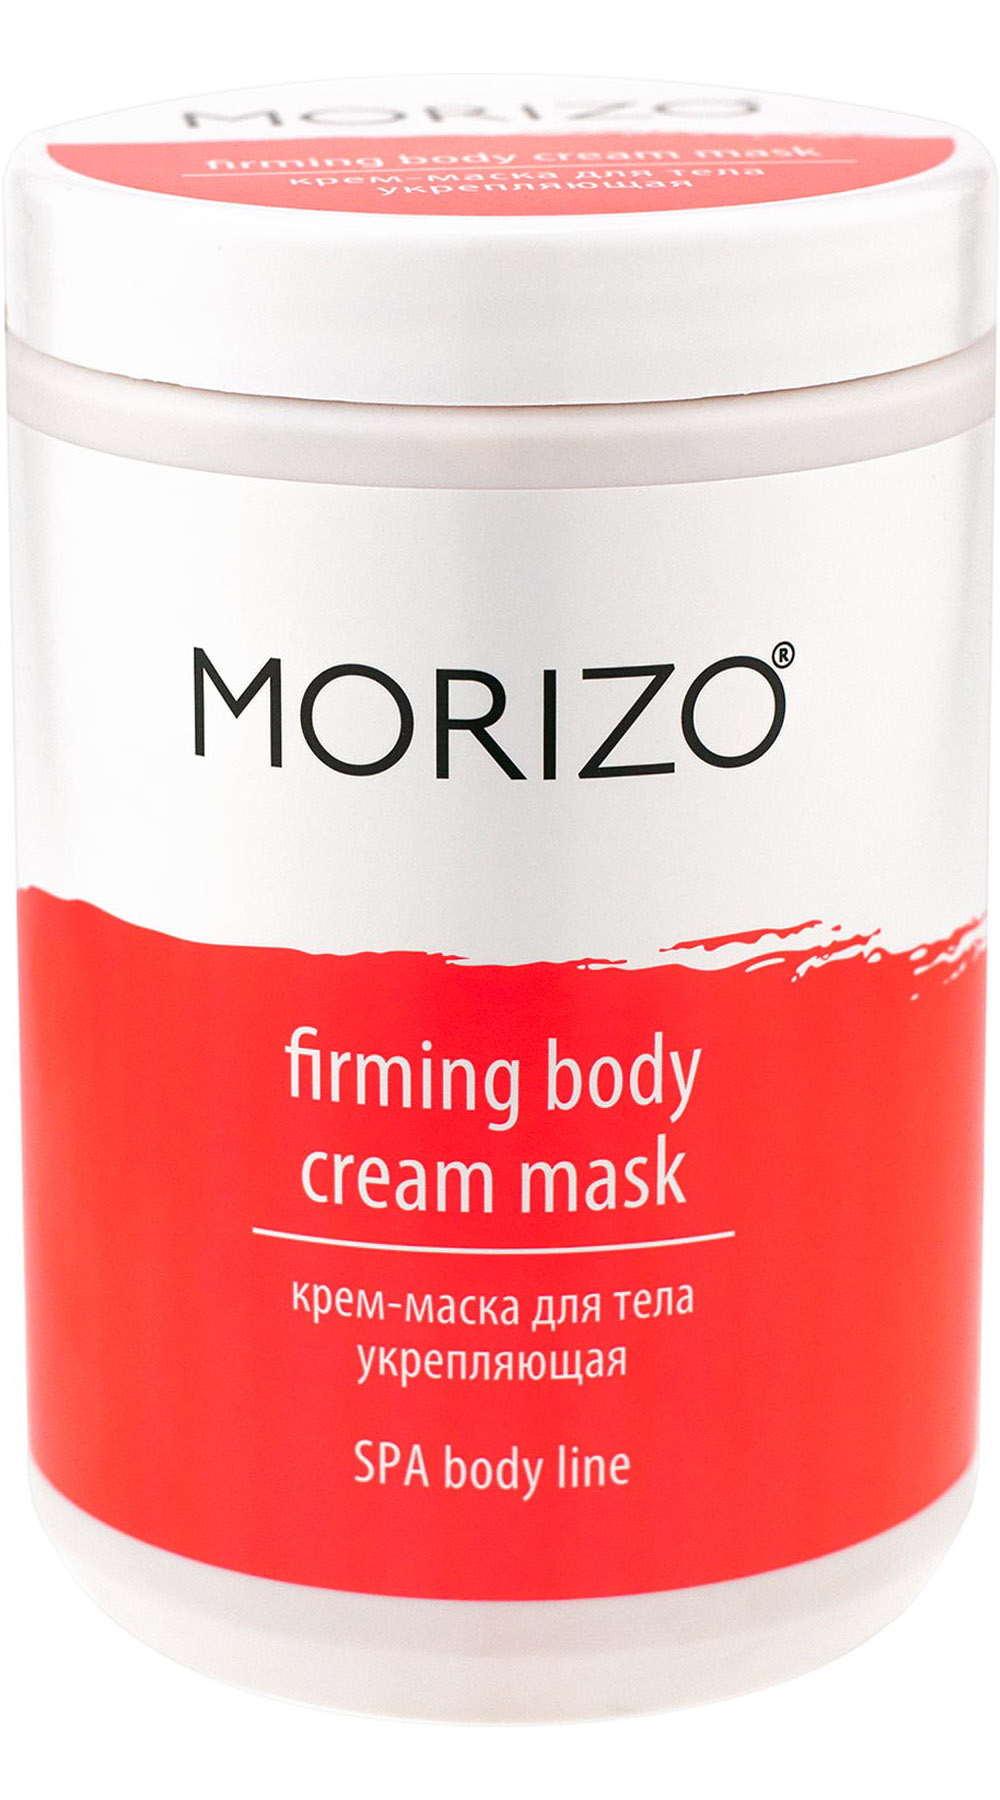 Morizo Крем-маска для тела укрепляющая, 1000 мл (Morizo, Ухо